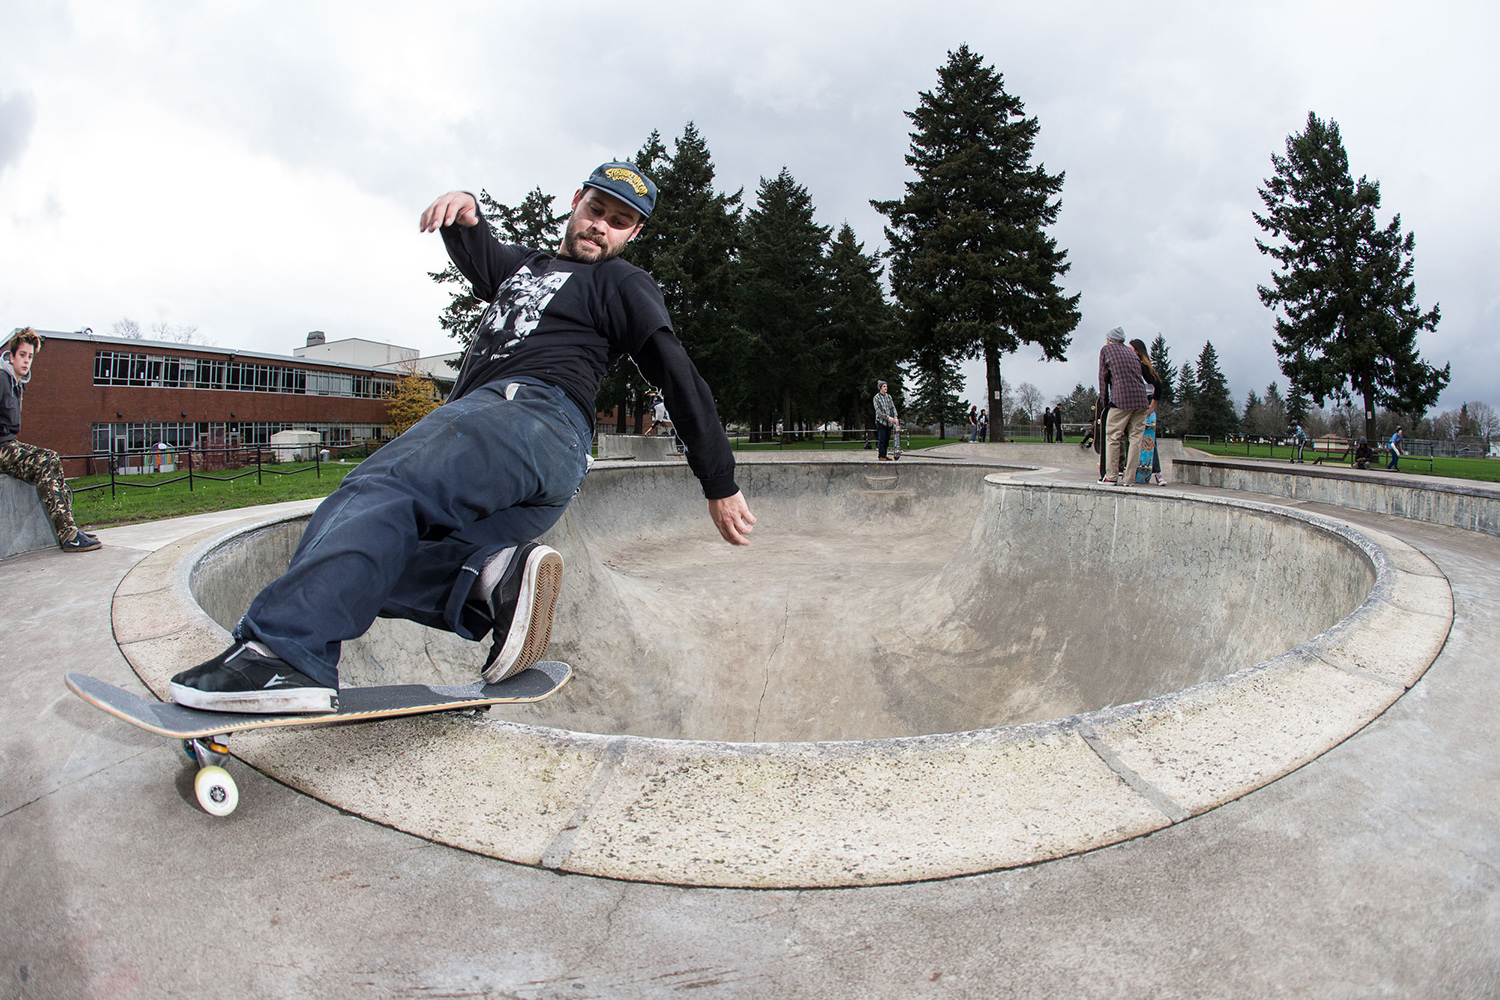  Portland resident Alex Foy frontside rocks Glenhaven Skatepark’s Peanut Bowl with style. 